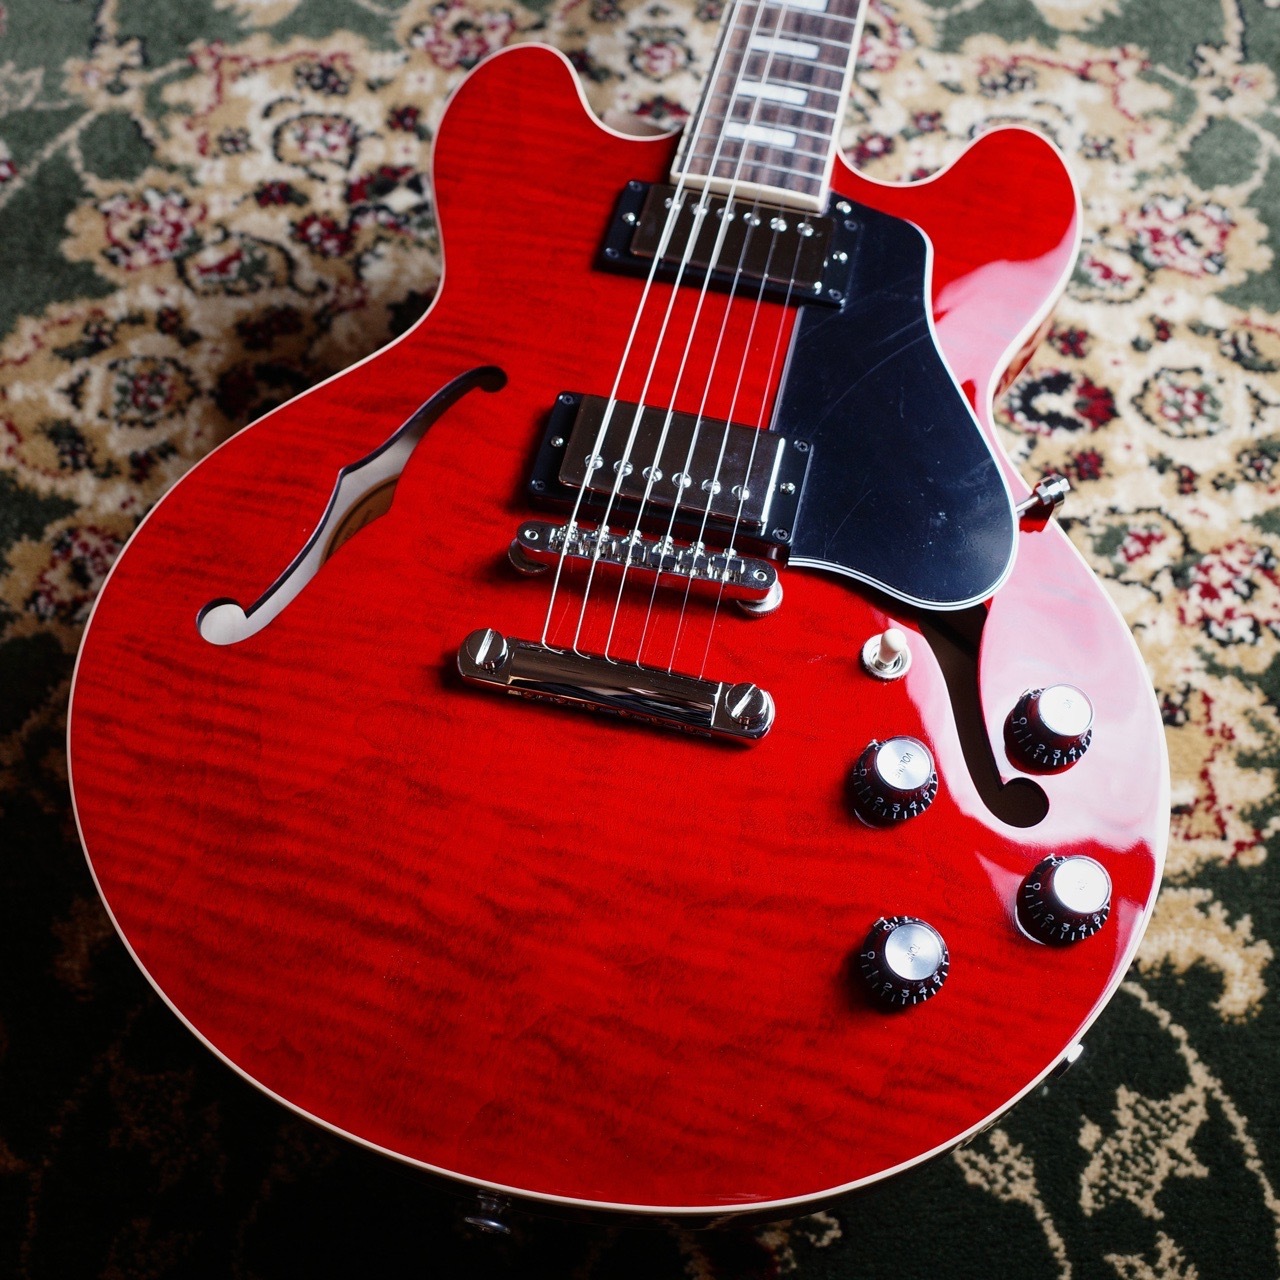 新品Gibson ES-339 Figured Sixties Cherry